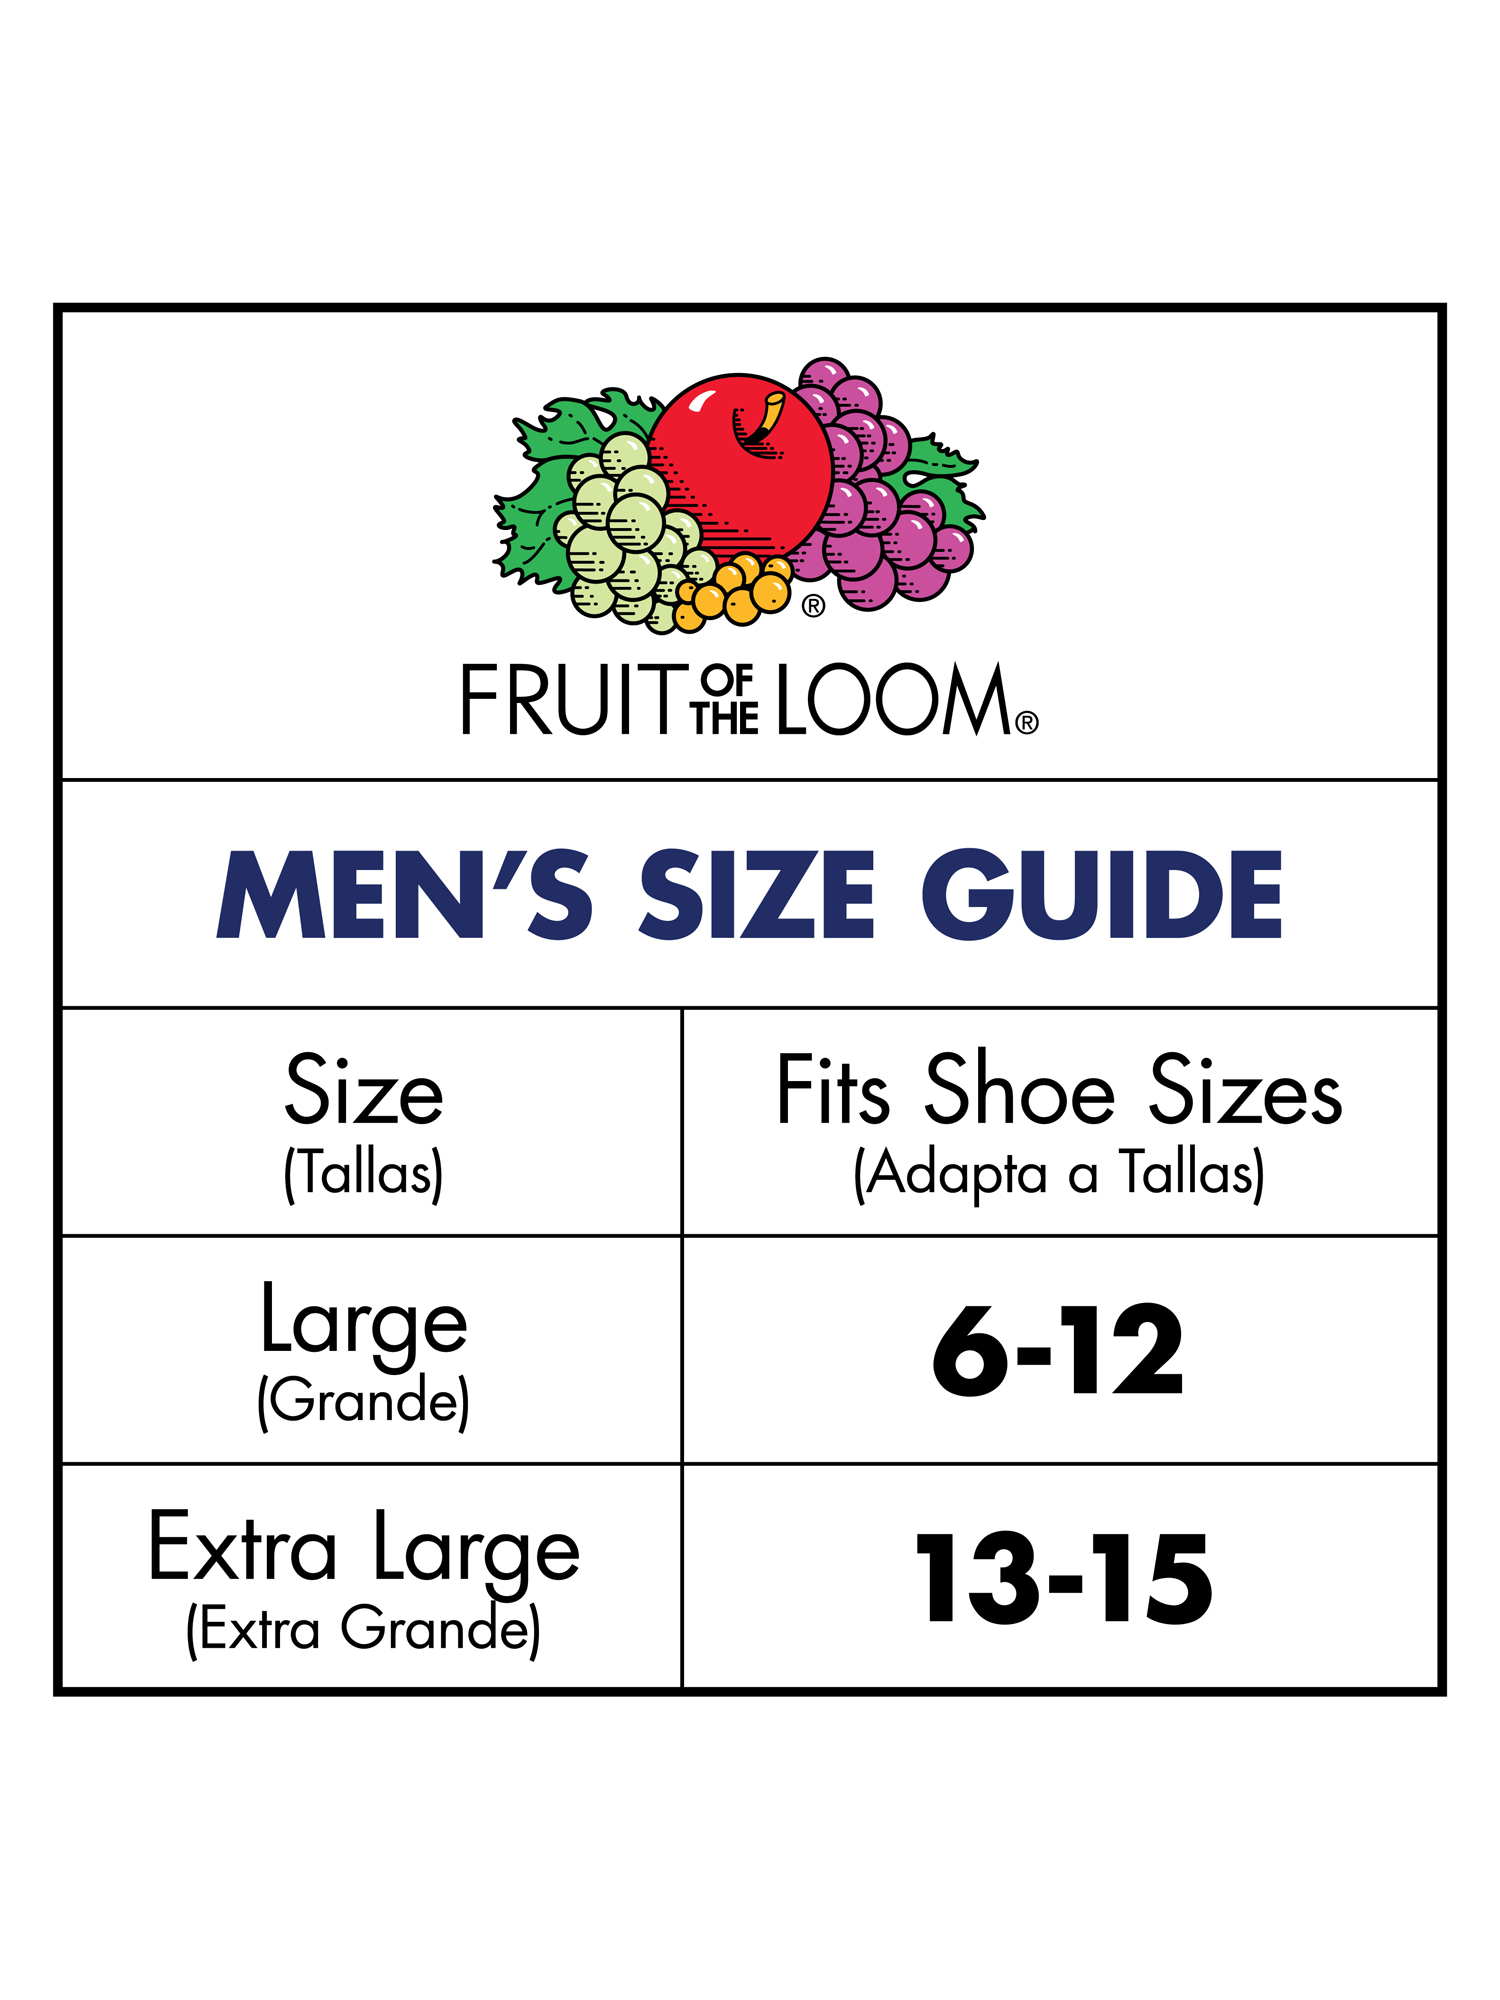 Fruit of the Loom Athletic Socks, 12 Pack - image 5 of 7